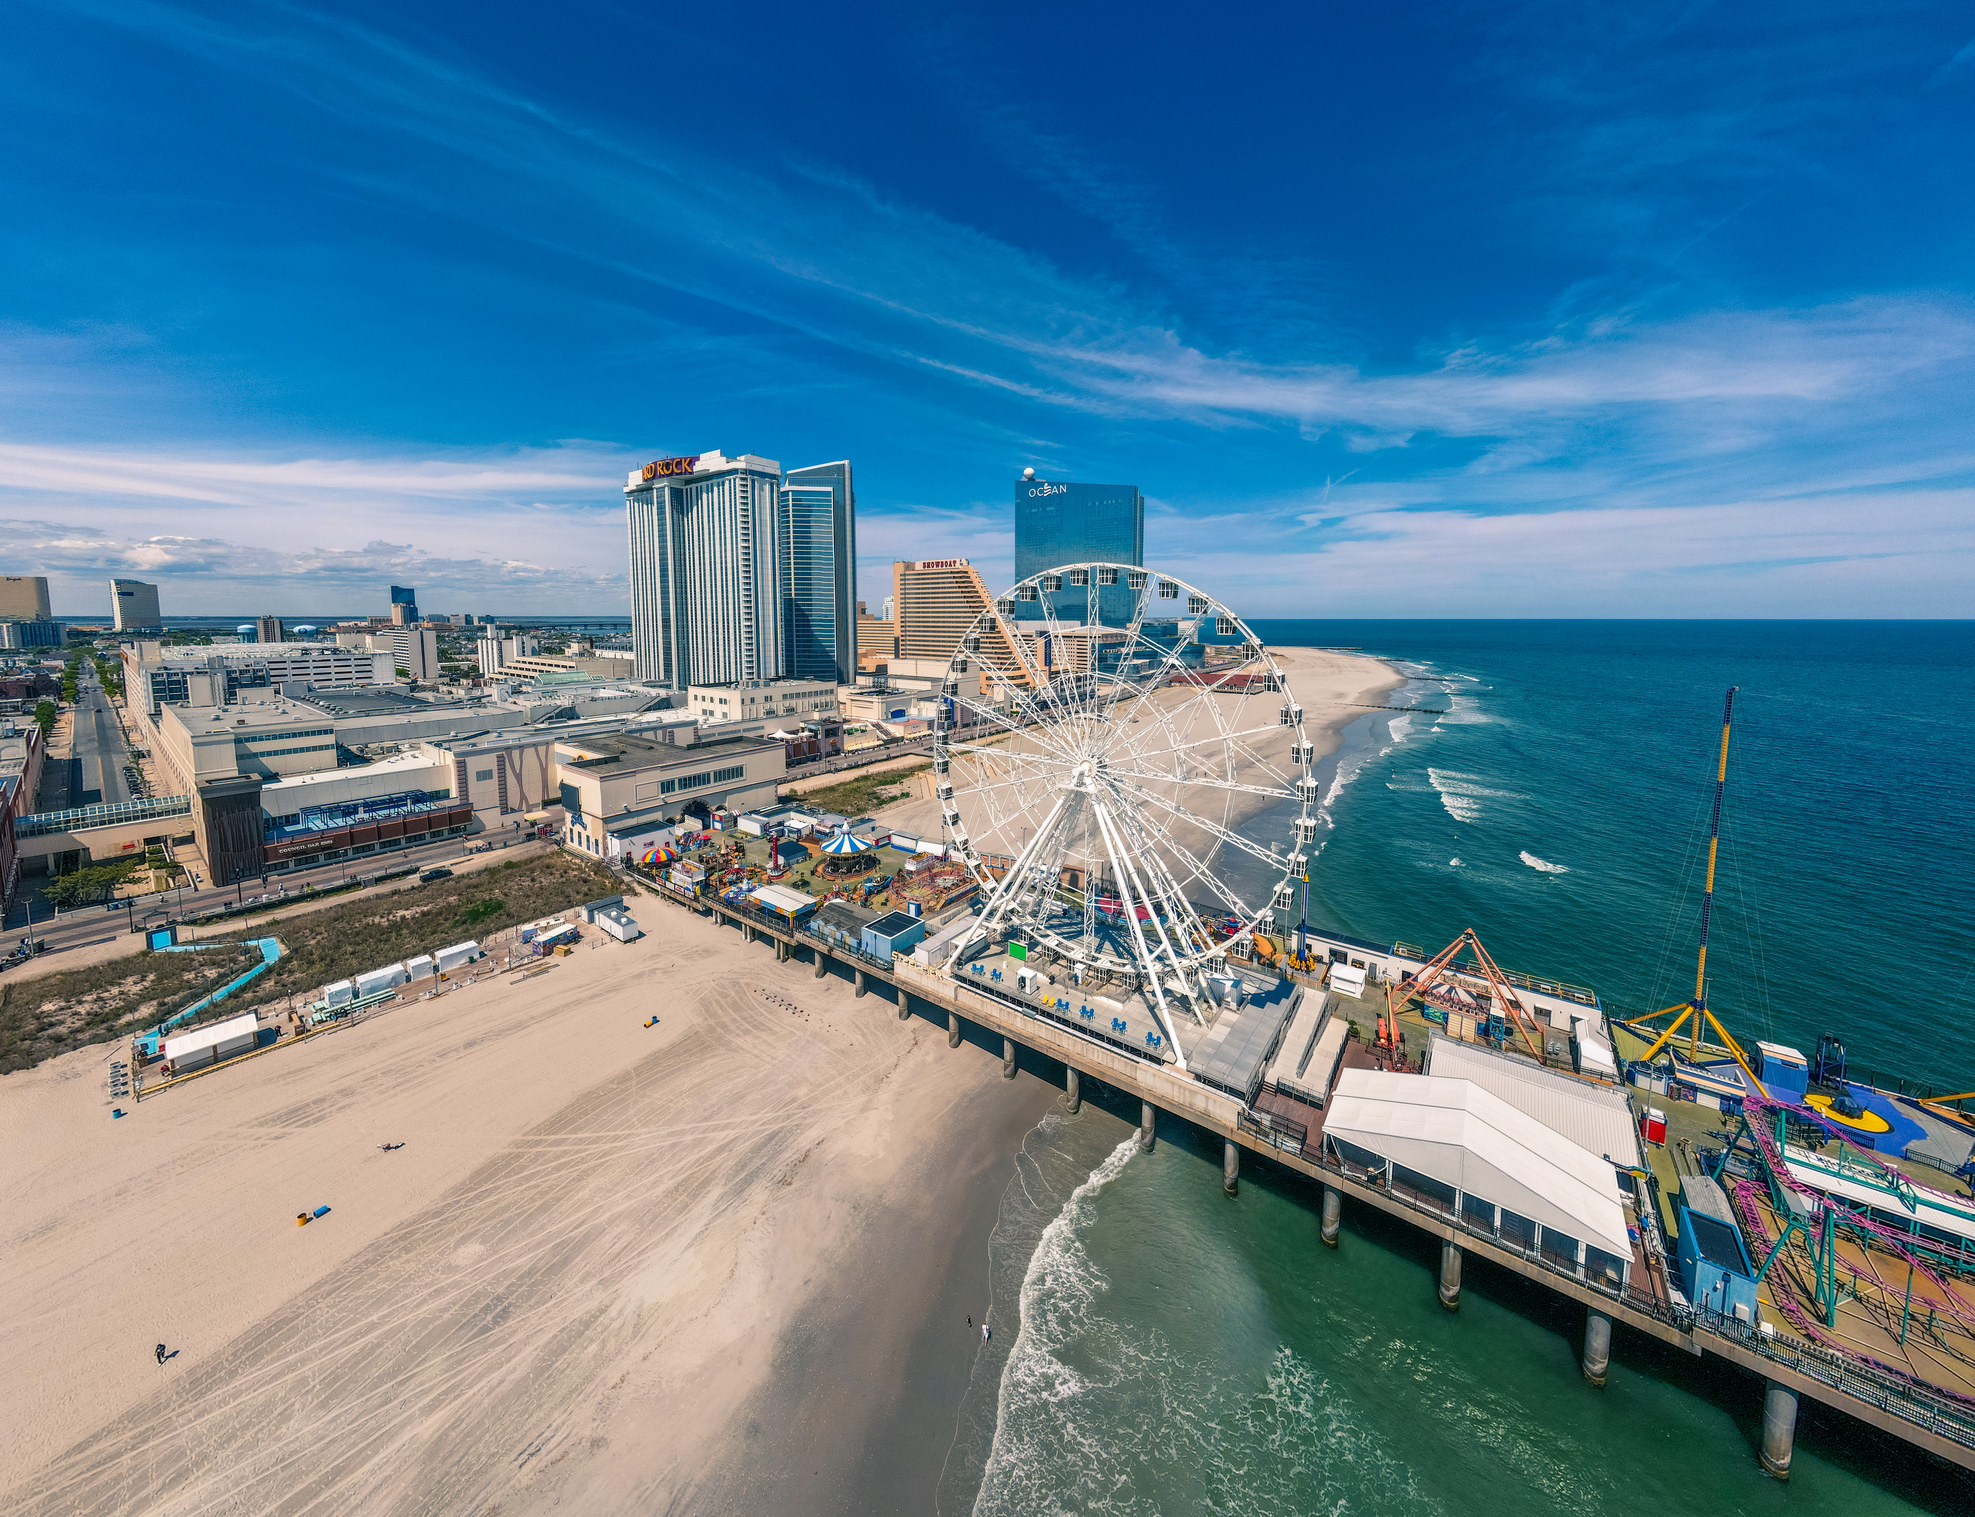 Atlantic City boardwalk and Ferris wheel